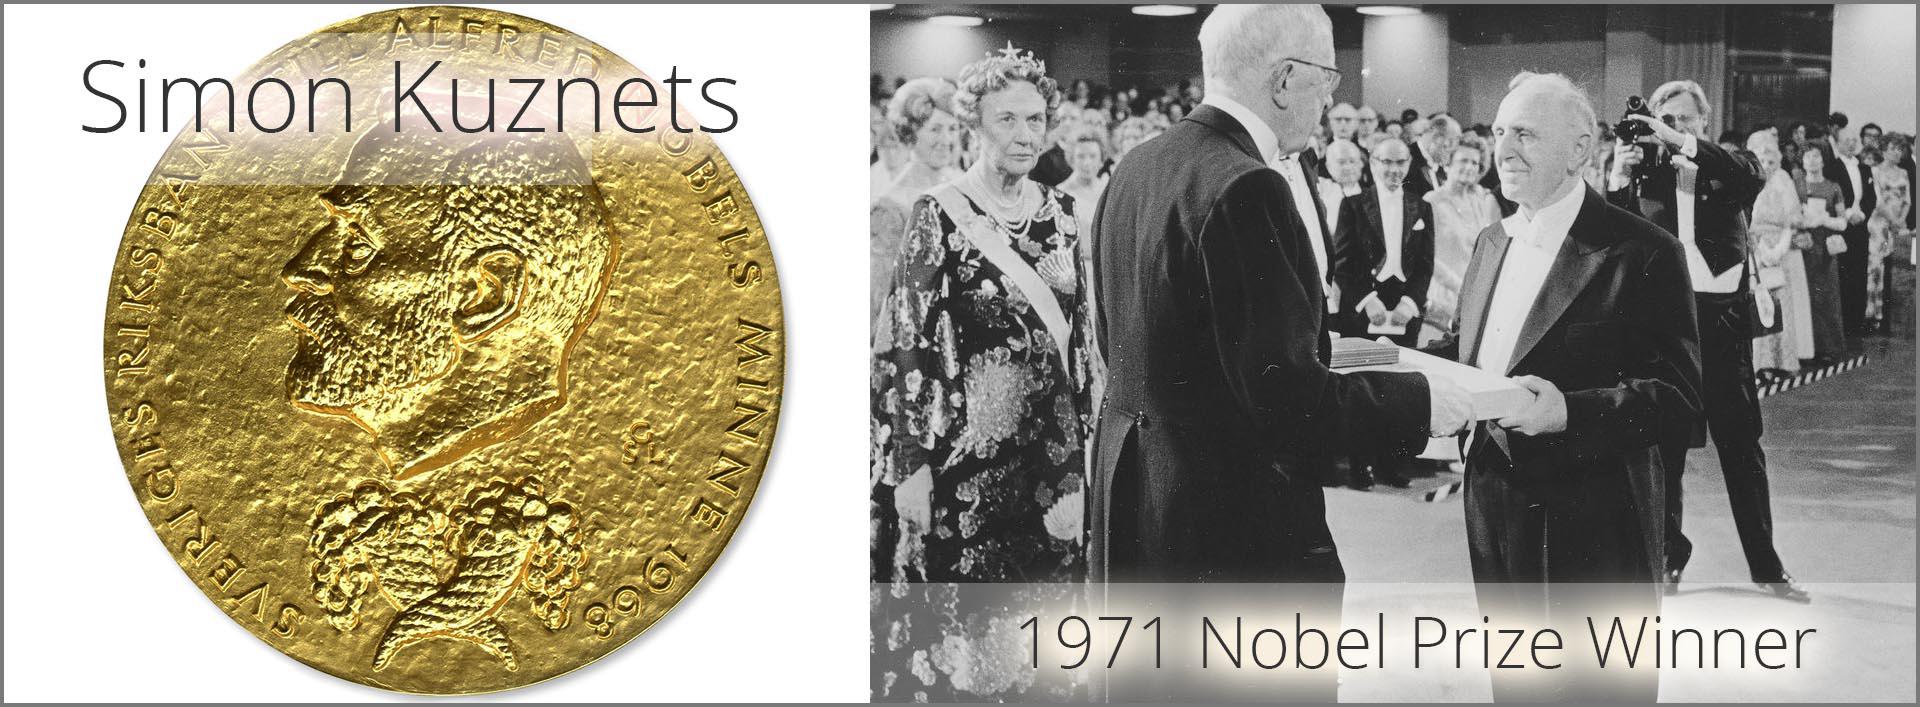 Simon Kuznets -1971 Nobel Prize Winner